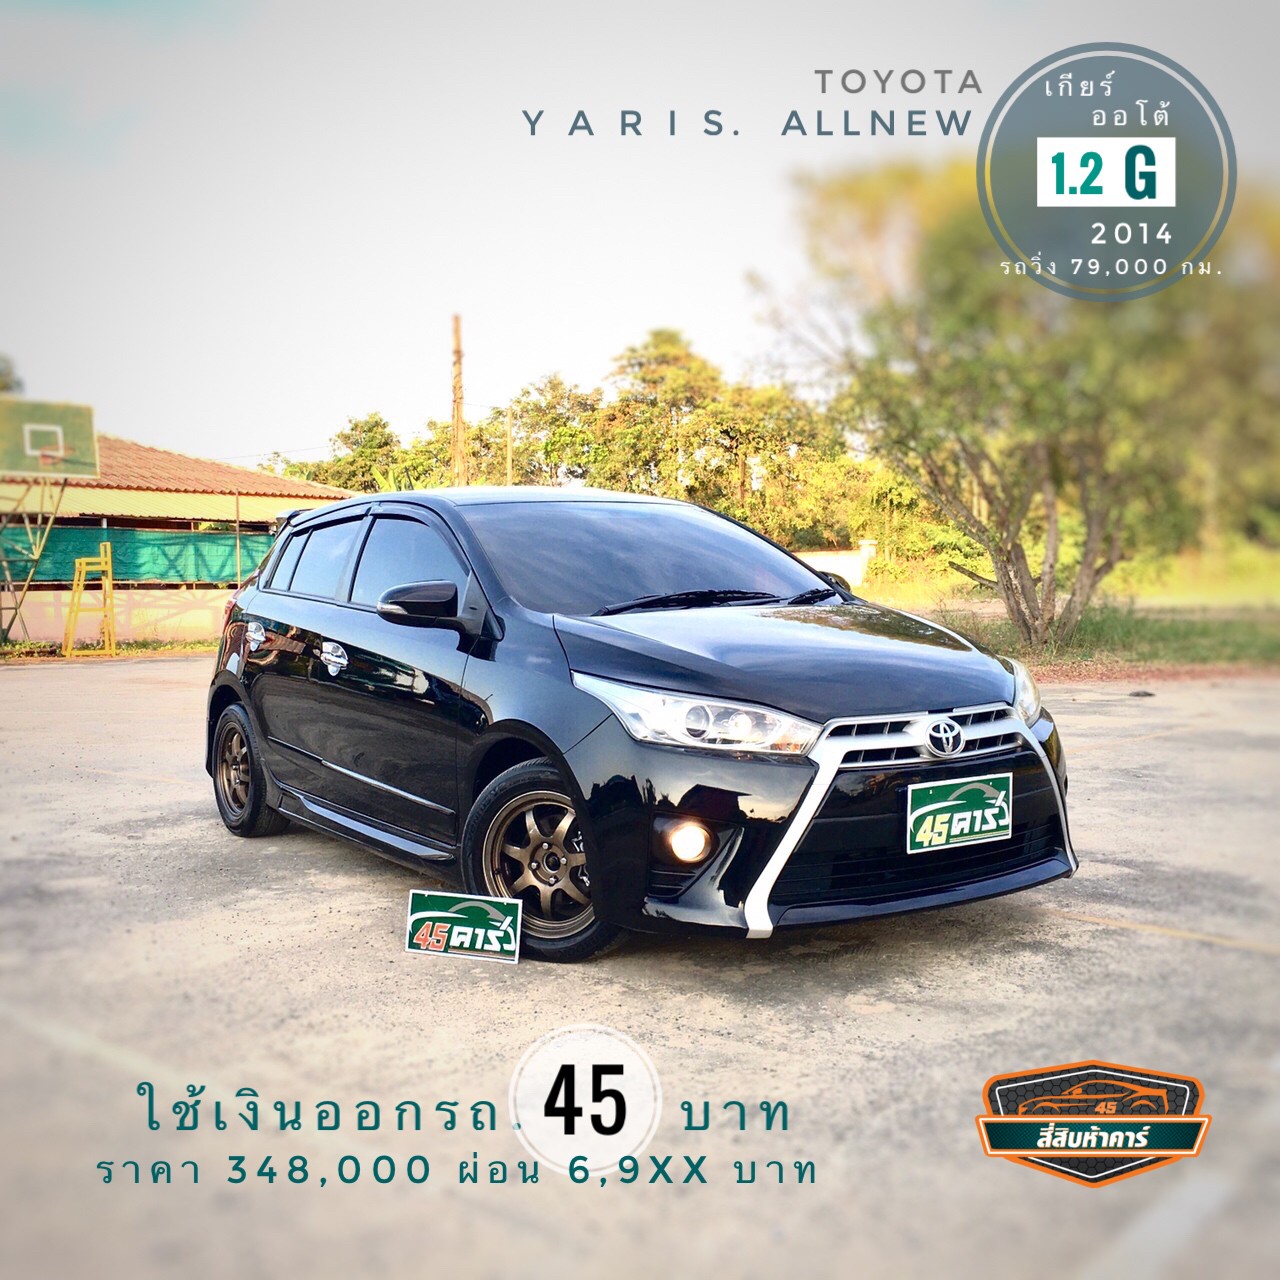 Toyota Yaris Allnew 1.2 G '2014 A/T